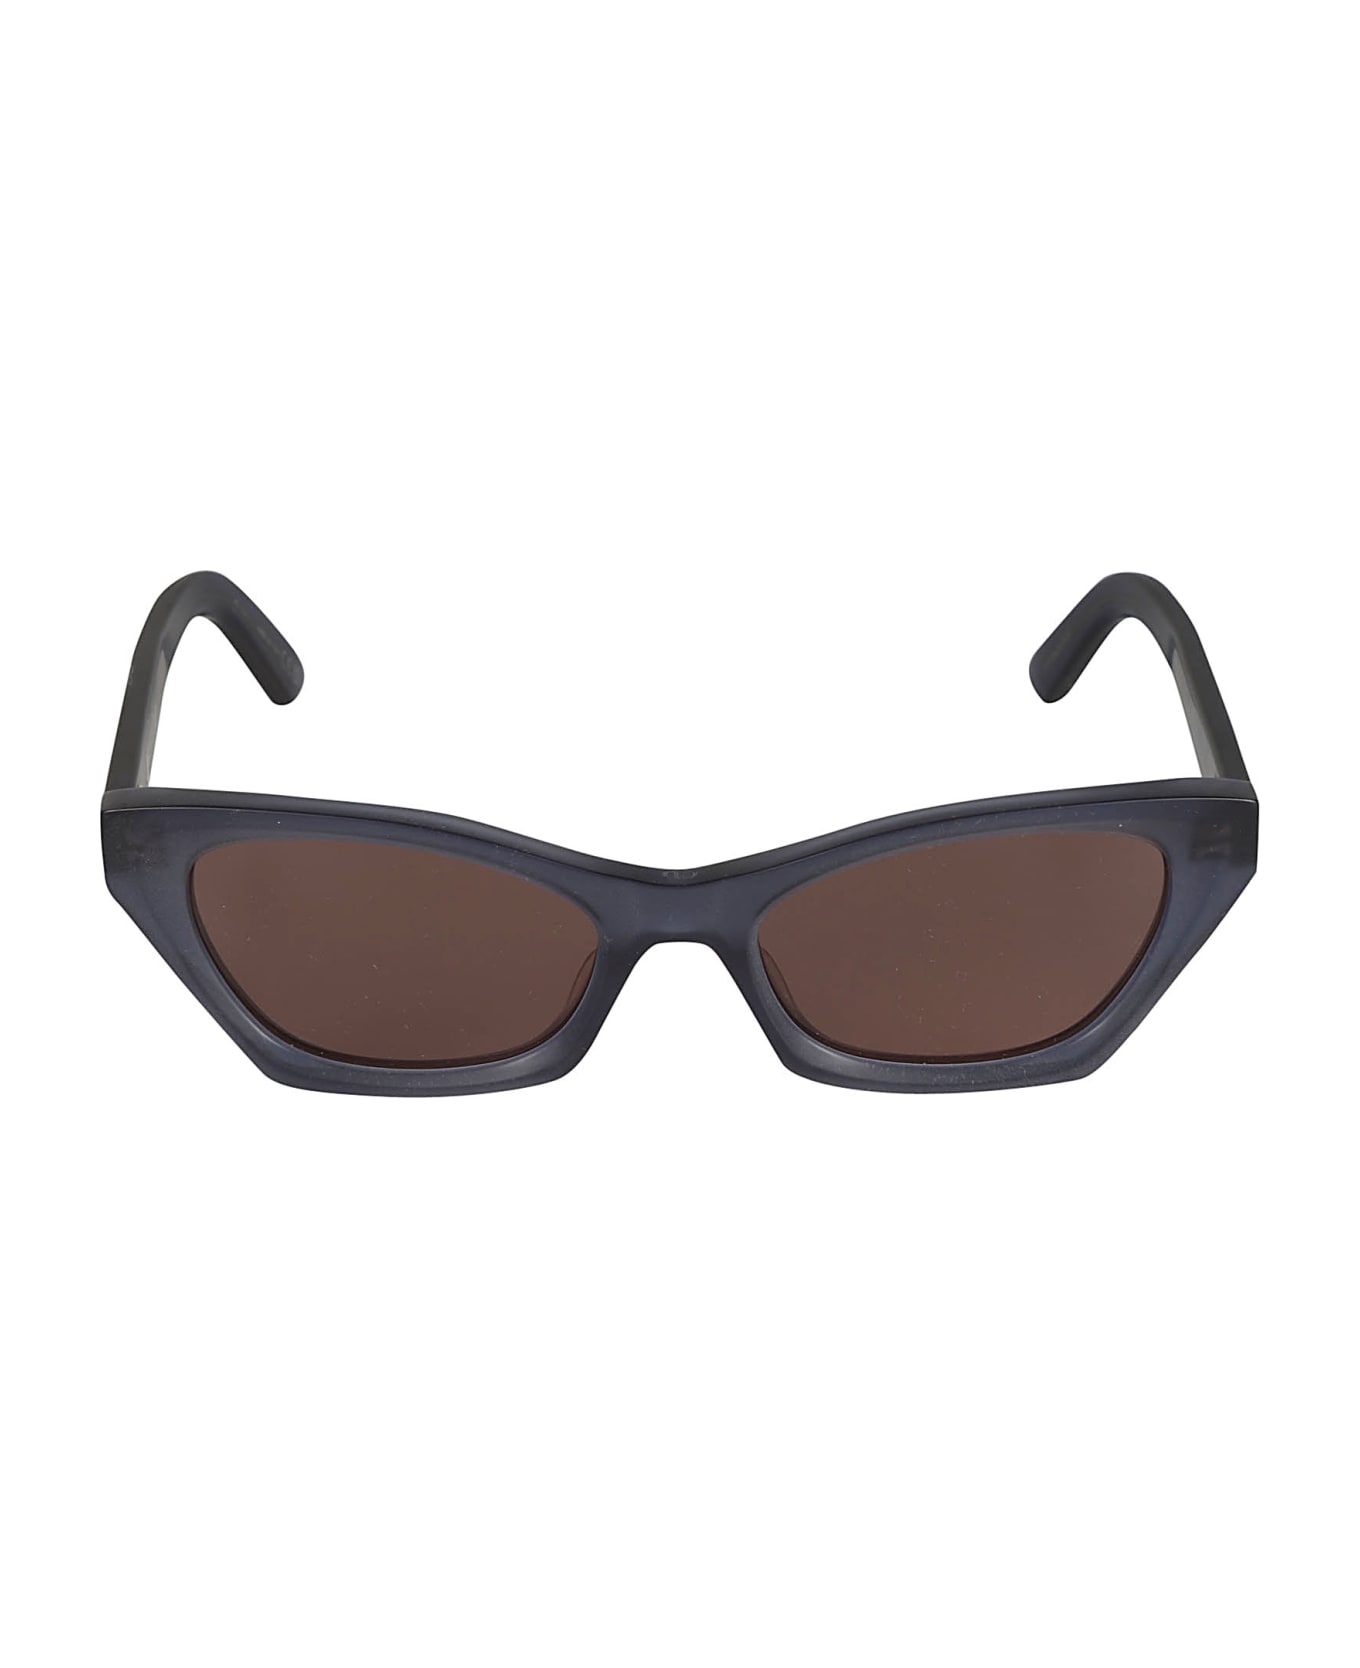 Dior Eyewear Midnight Sunglasses - 31f0